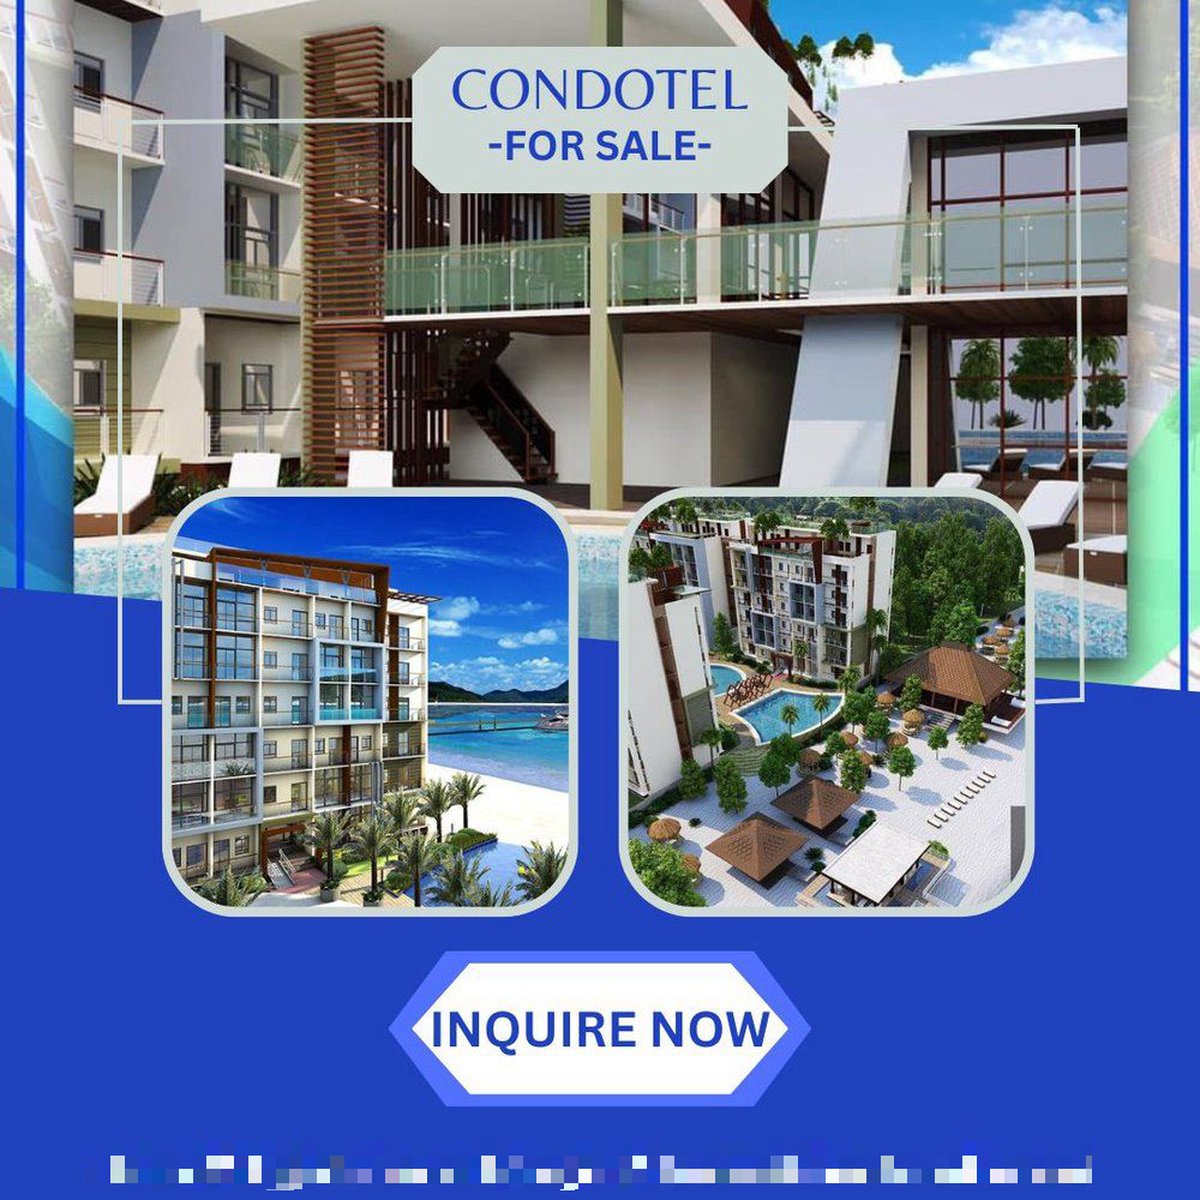 15.00 sqm 1-bedroom Condotels For Sale in Puerto Princesa Palawan